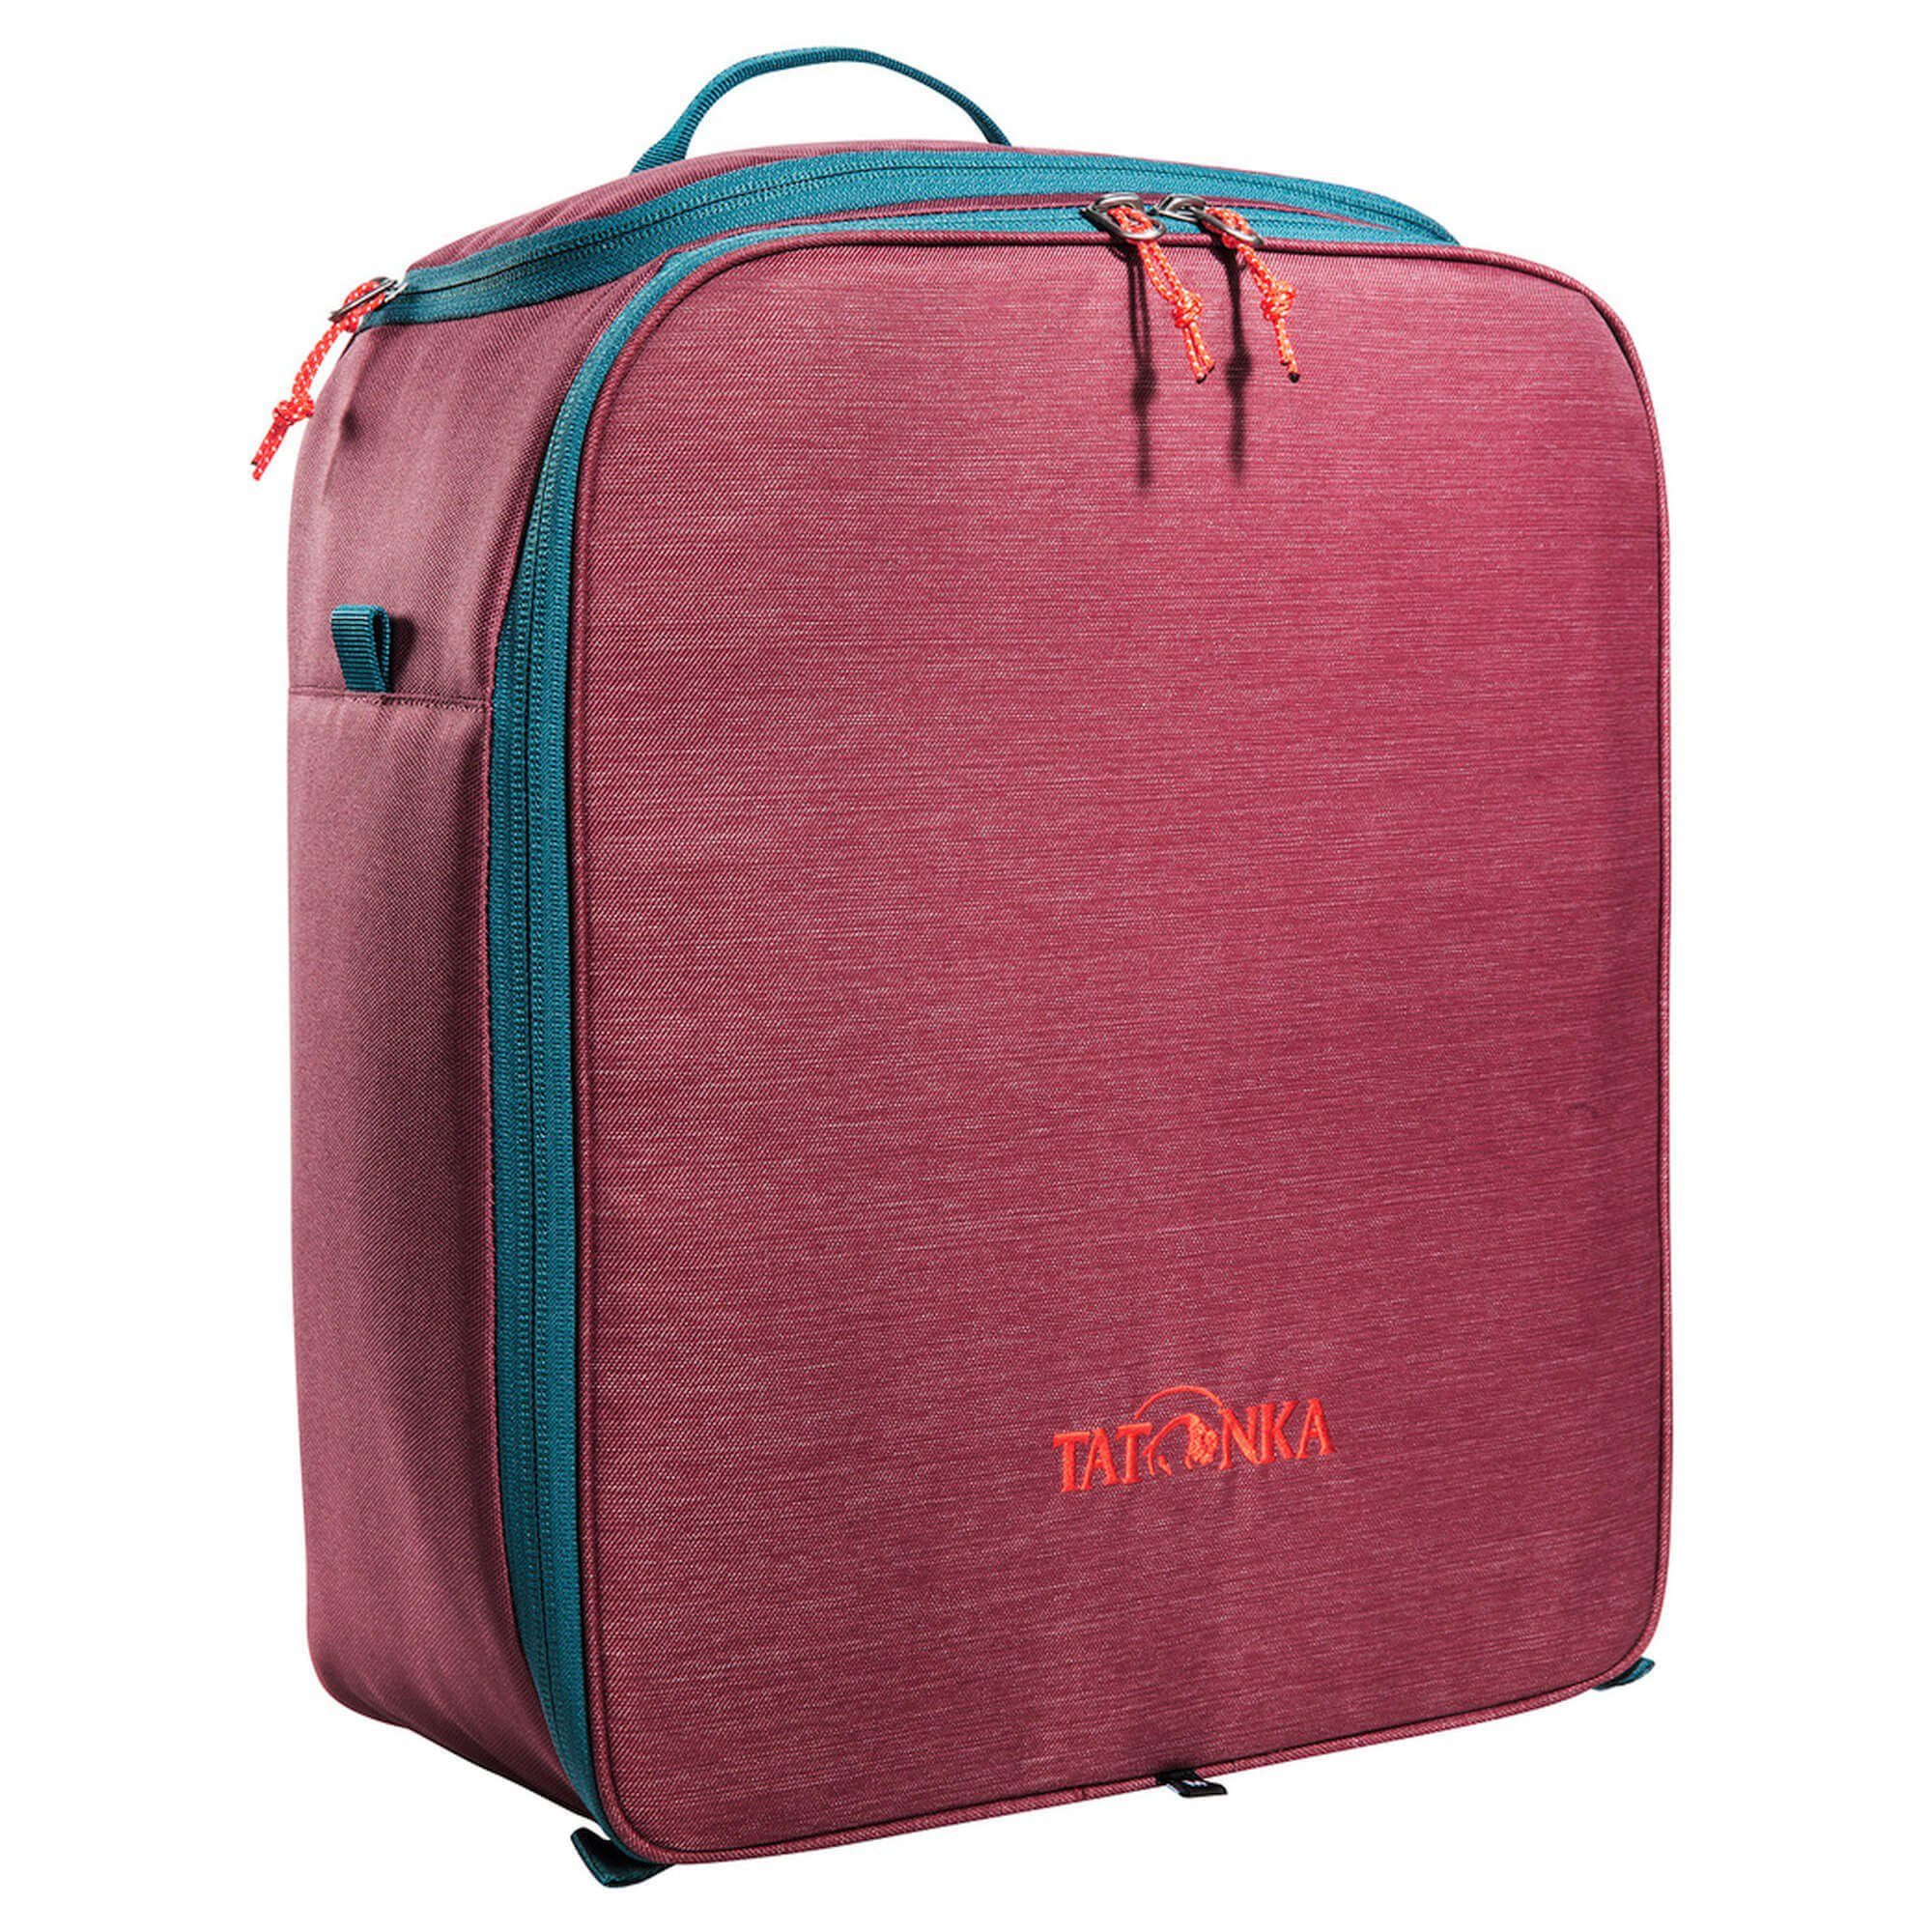 TATONKA® Einkaufsbeutel Cooler Bag M - Kühltasche 36 cm, 15 l bordeaux red